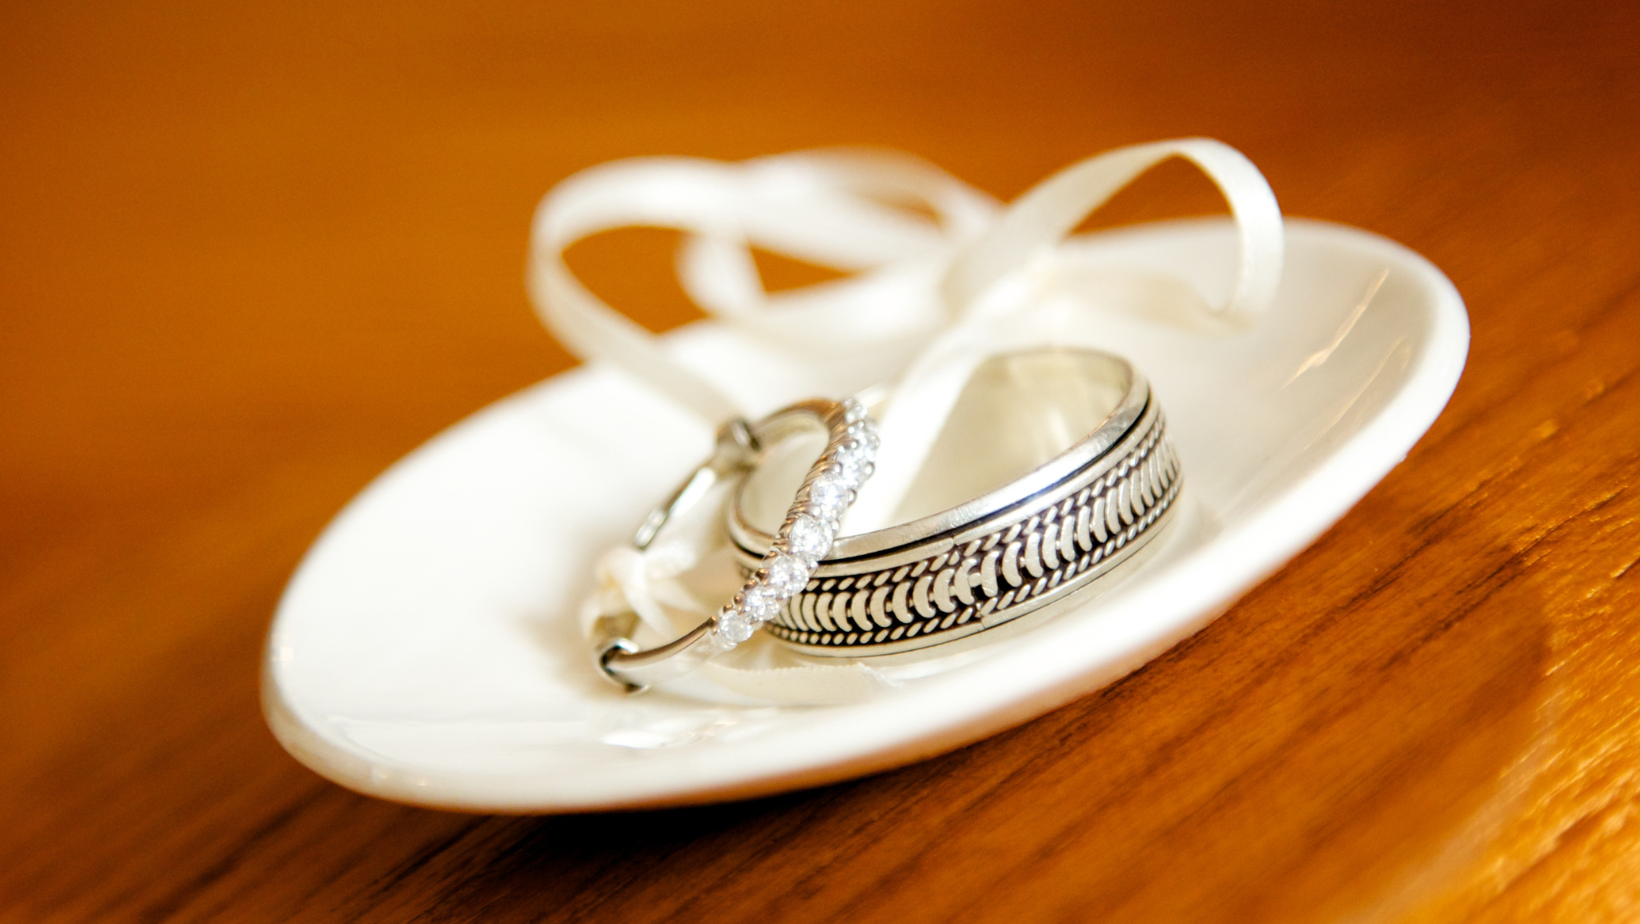 Infinity Twist Engagement Ring: Symbolising Endless Love